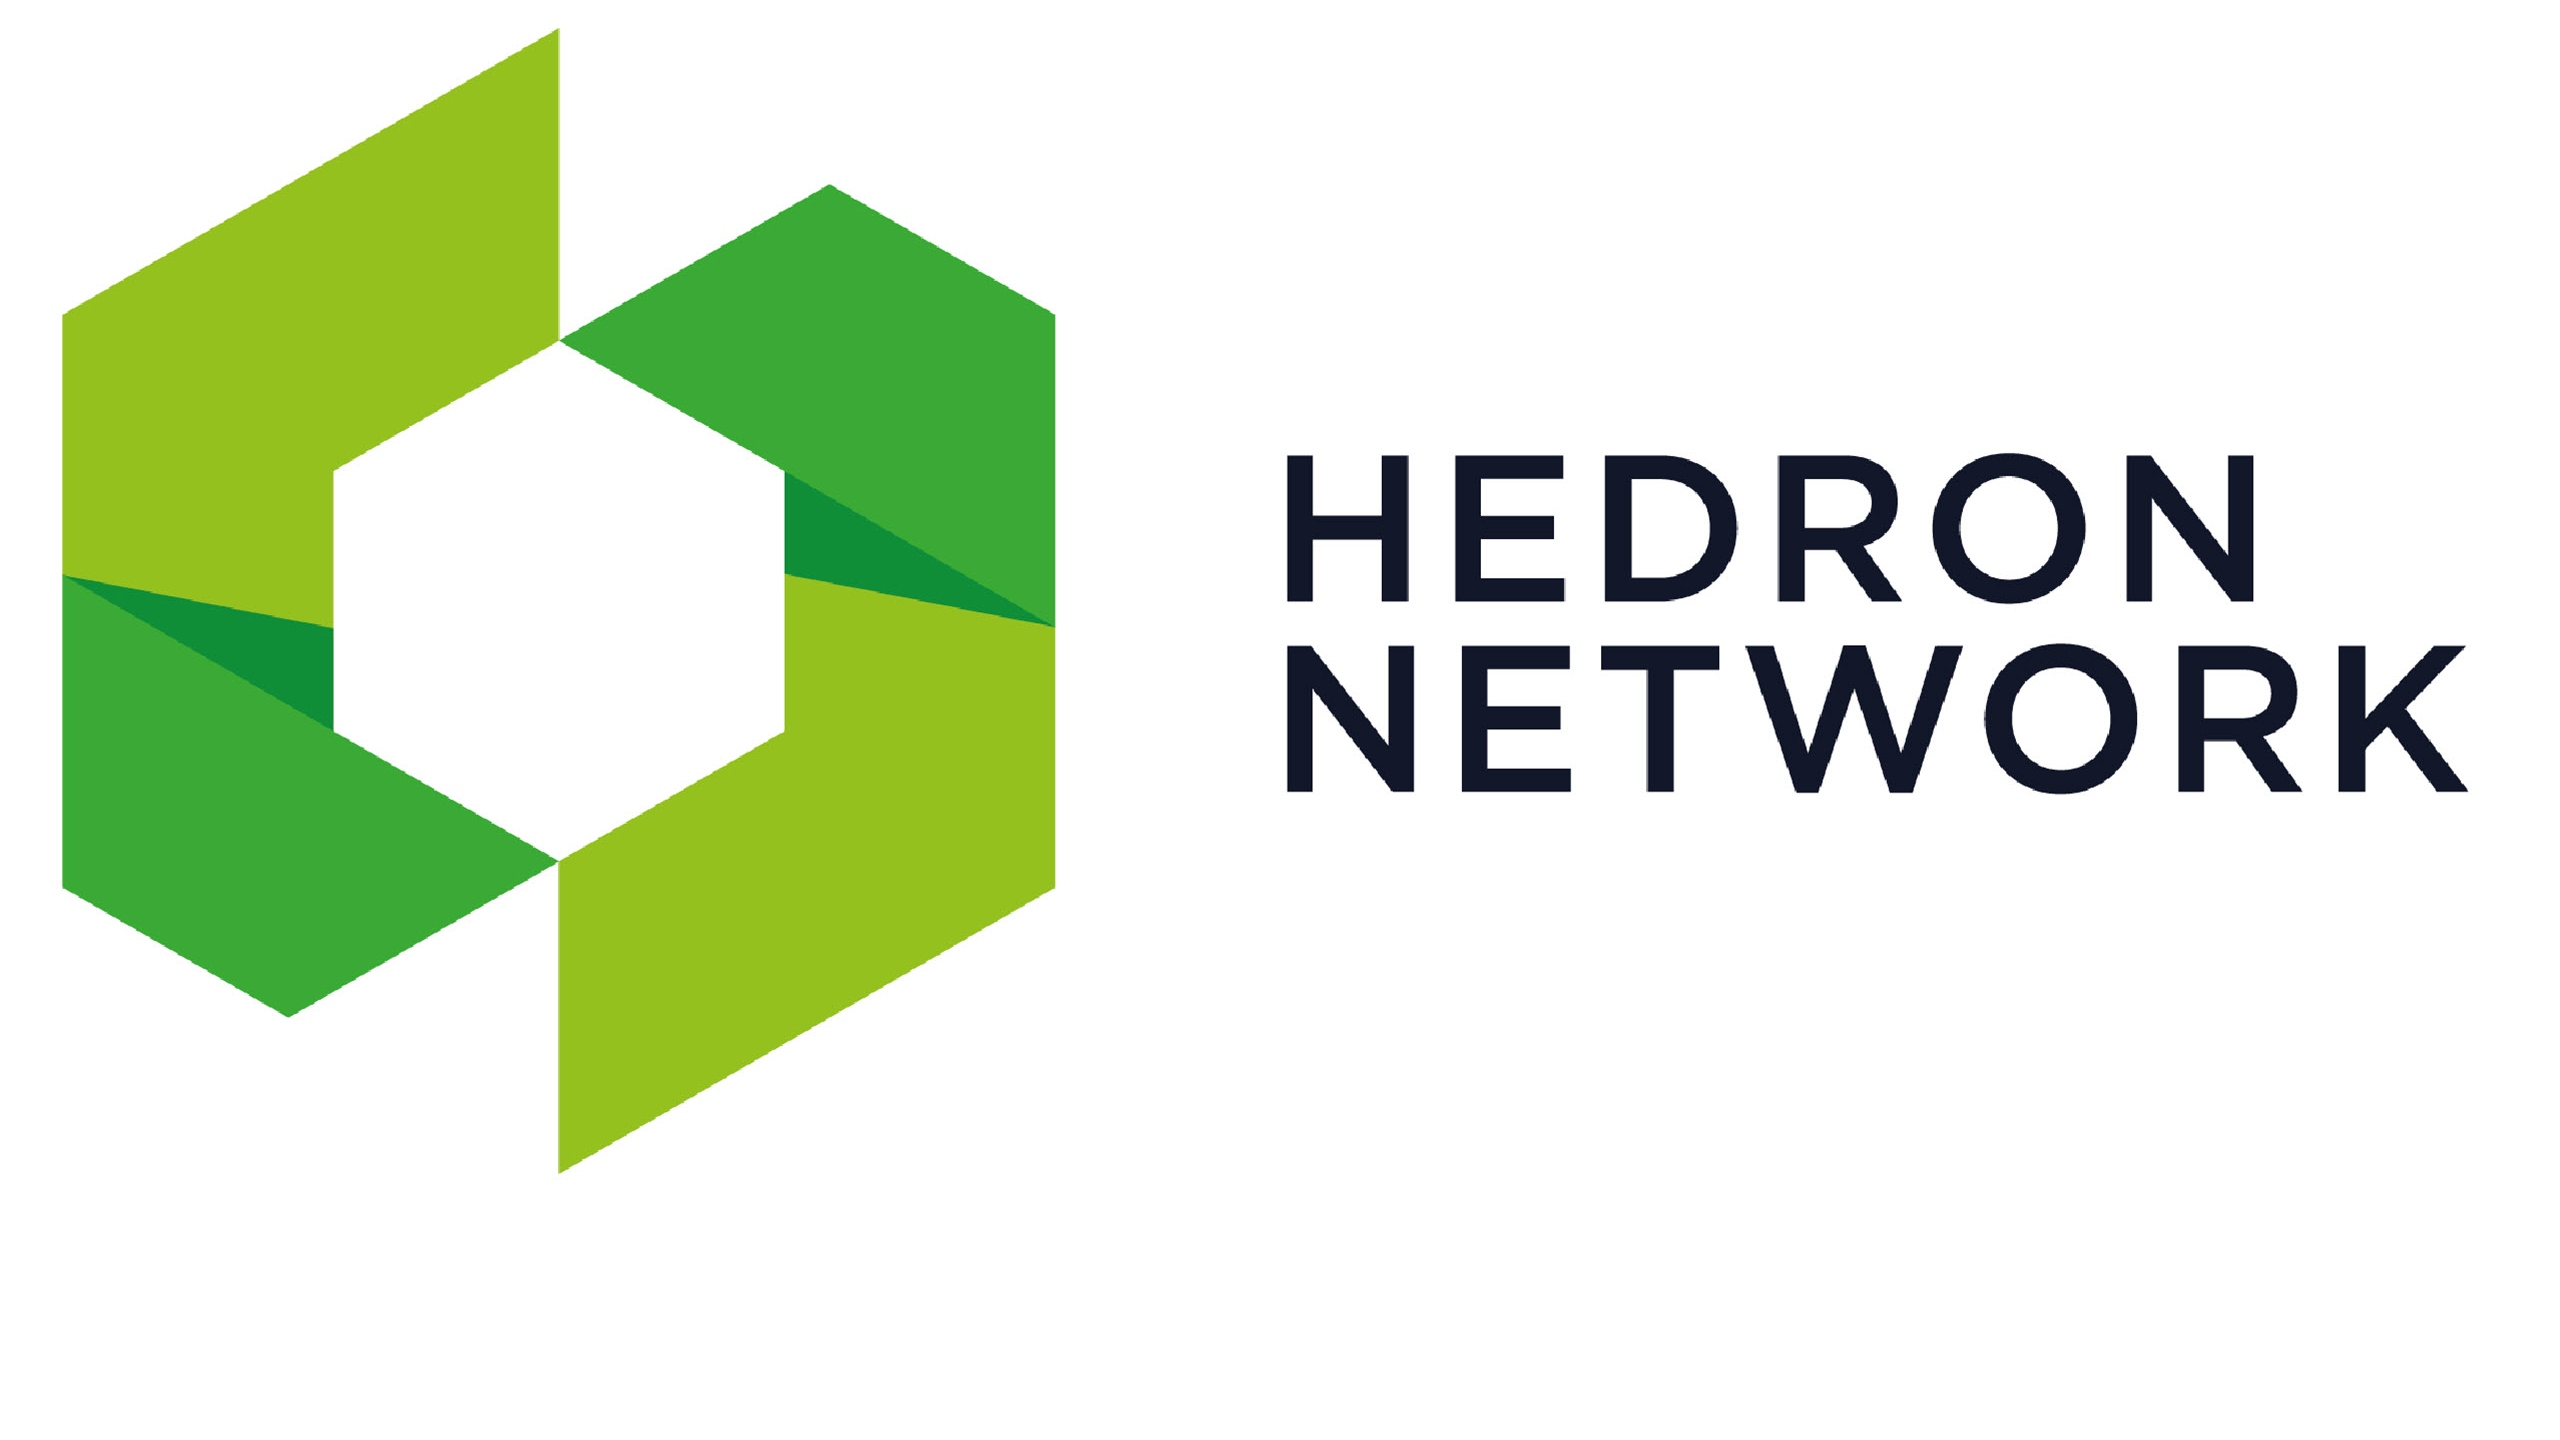 Hedron Network logo